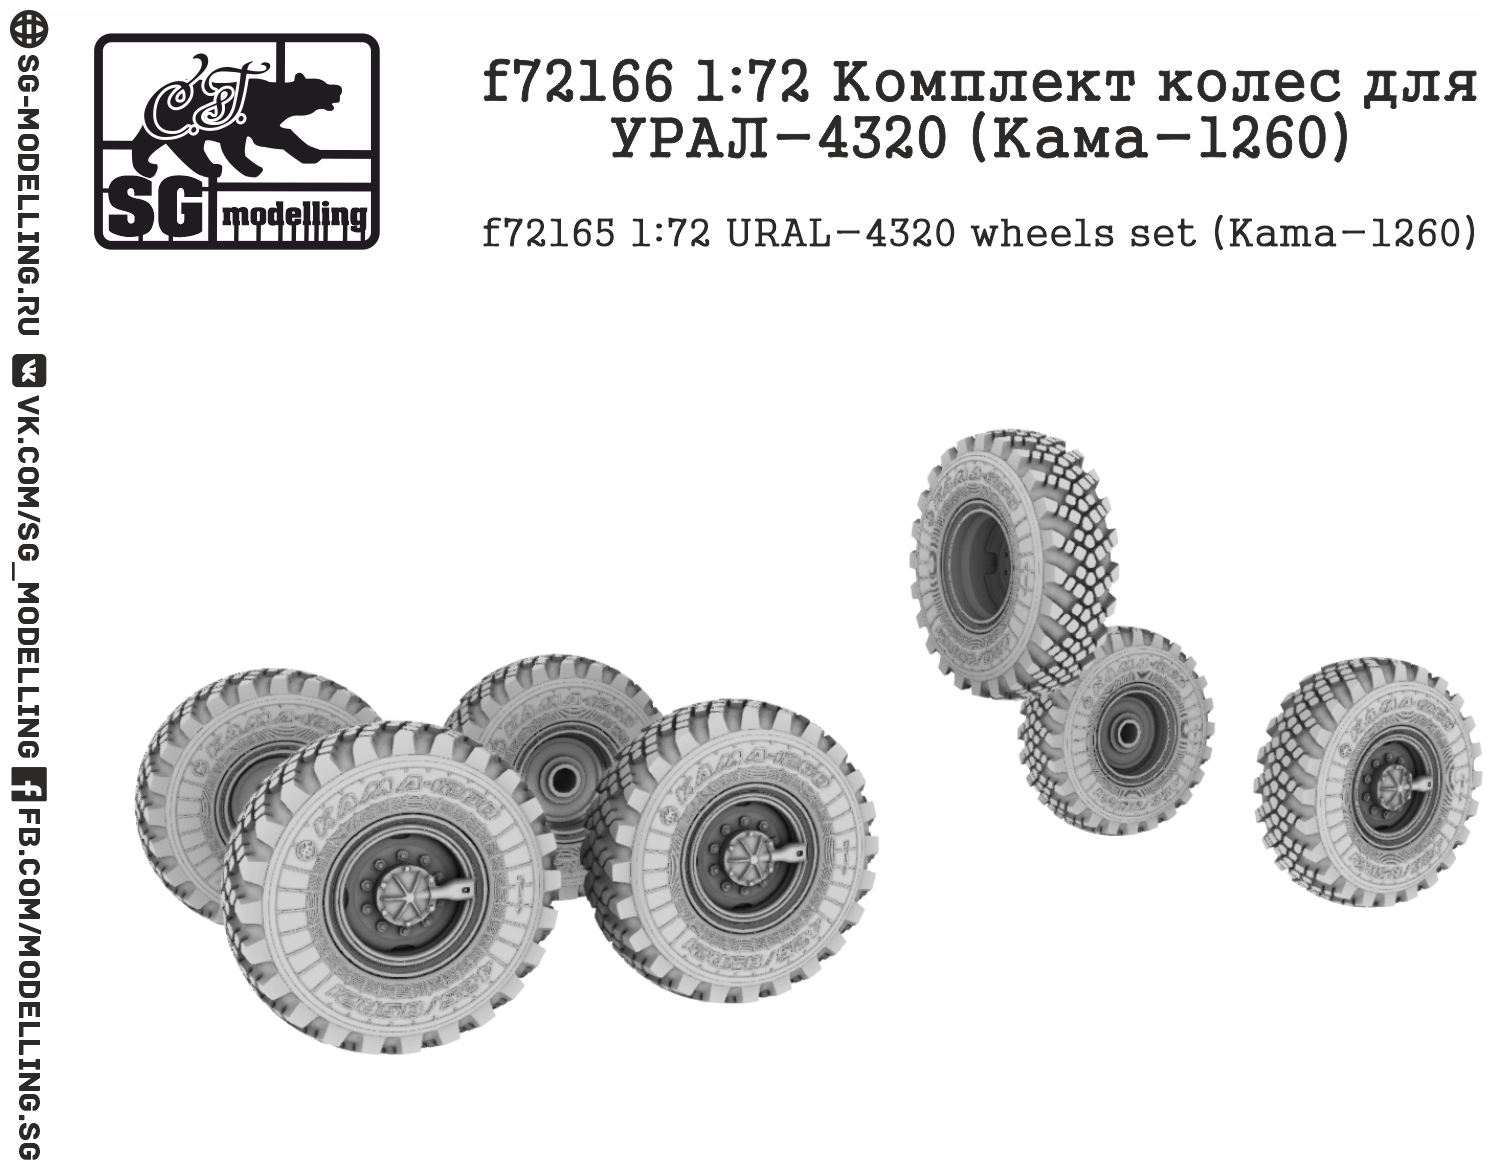 F72166 1:72 Комплект колес для УРАЛ-4320 (Кама-1260)